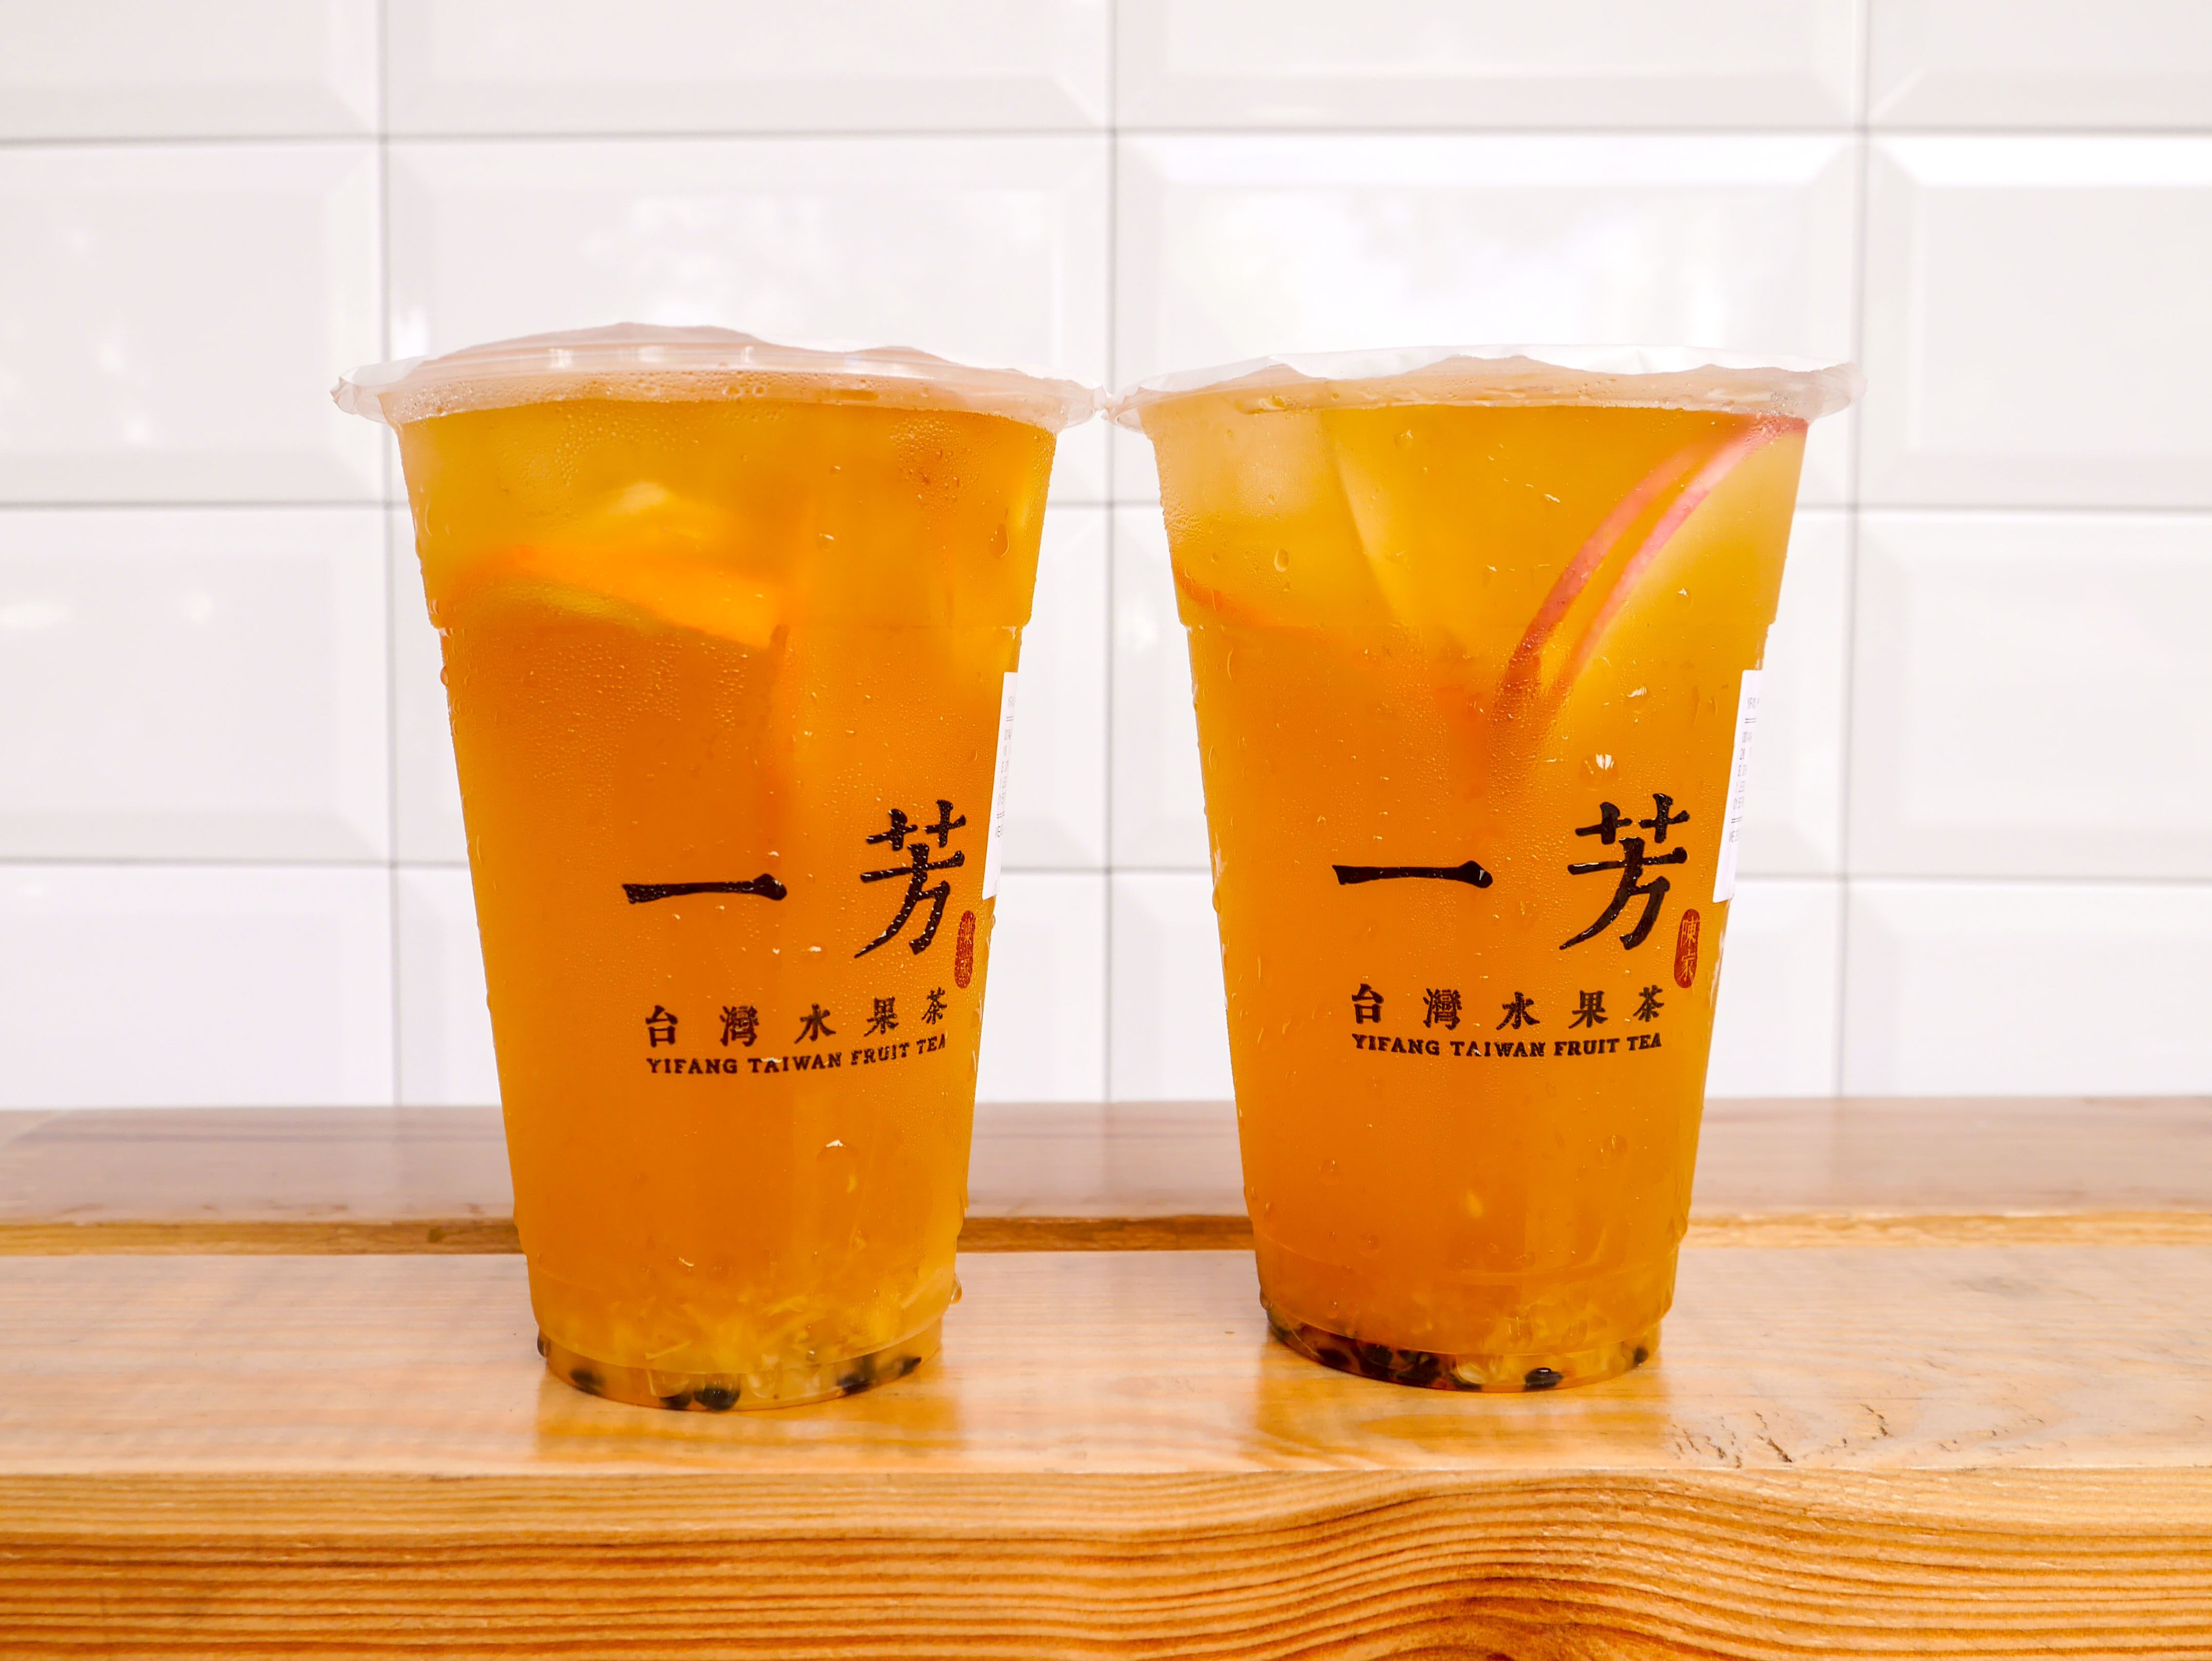 Medium Yi Fang Signature Fruit Tea â Yi Fang Taiwan Fruit Tea